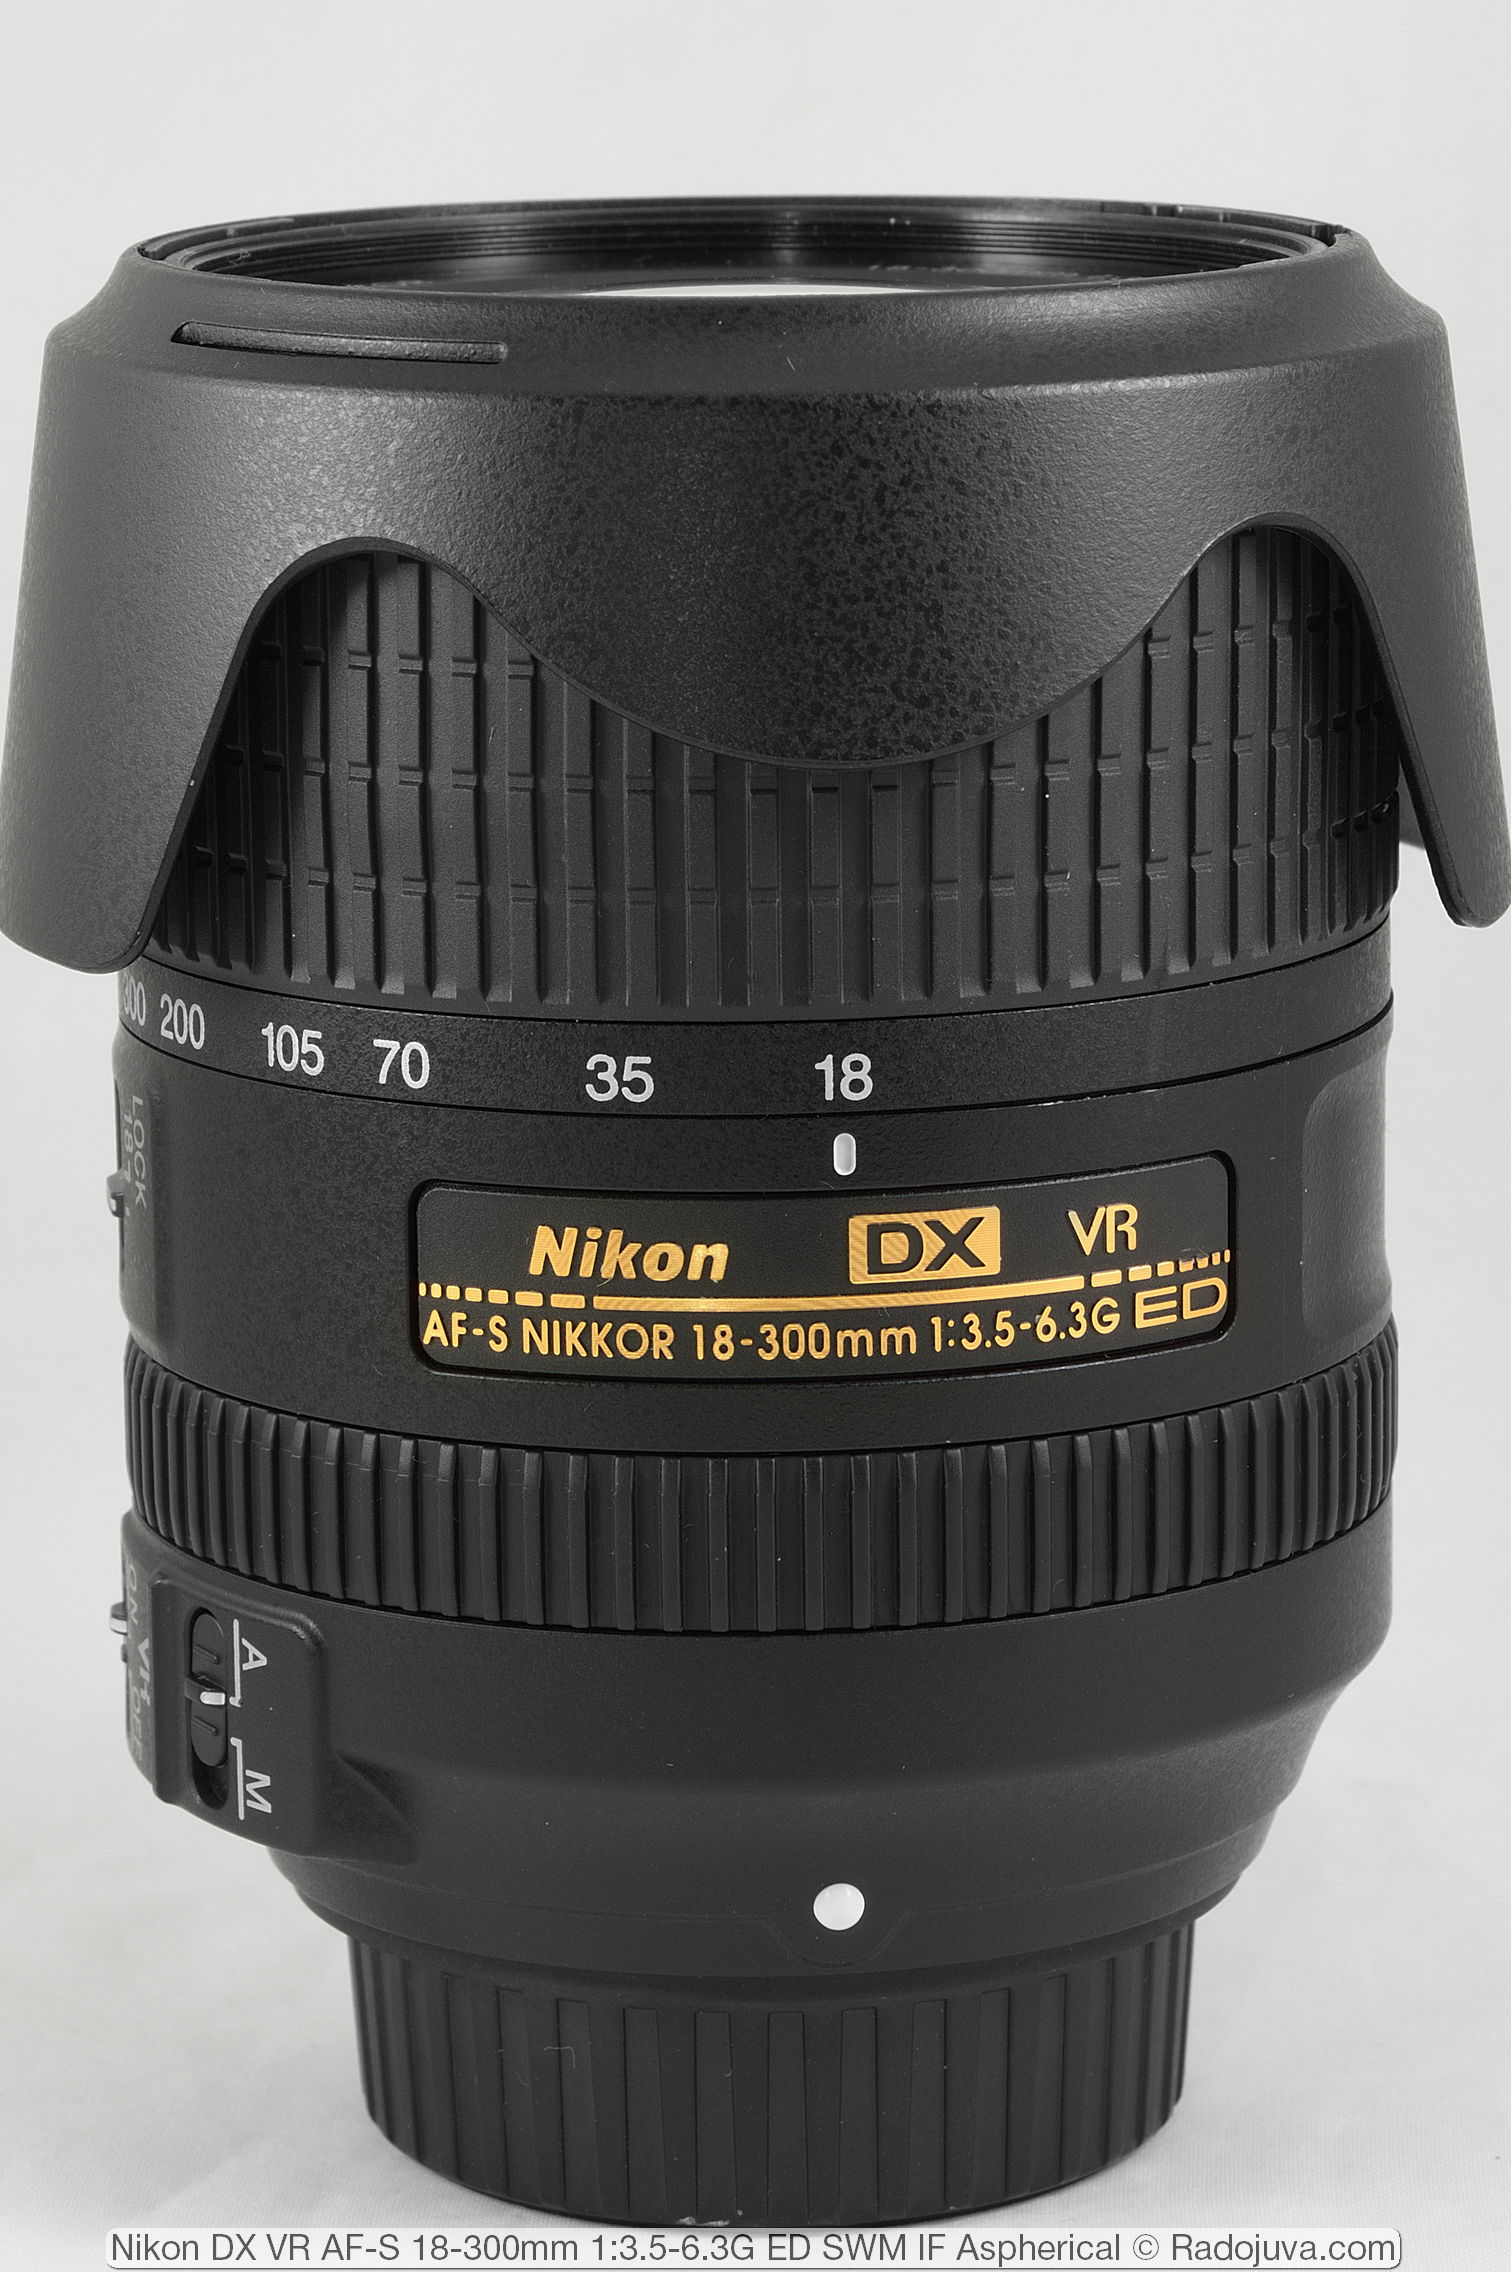 Nikon DX VR AF-S 18-300mm 1: 3.5-6.3G ED SWM IF Asferisch